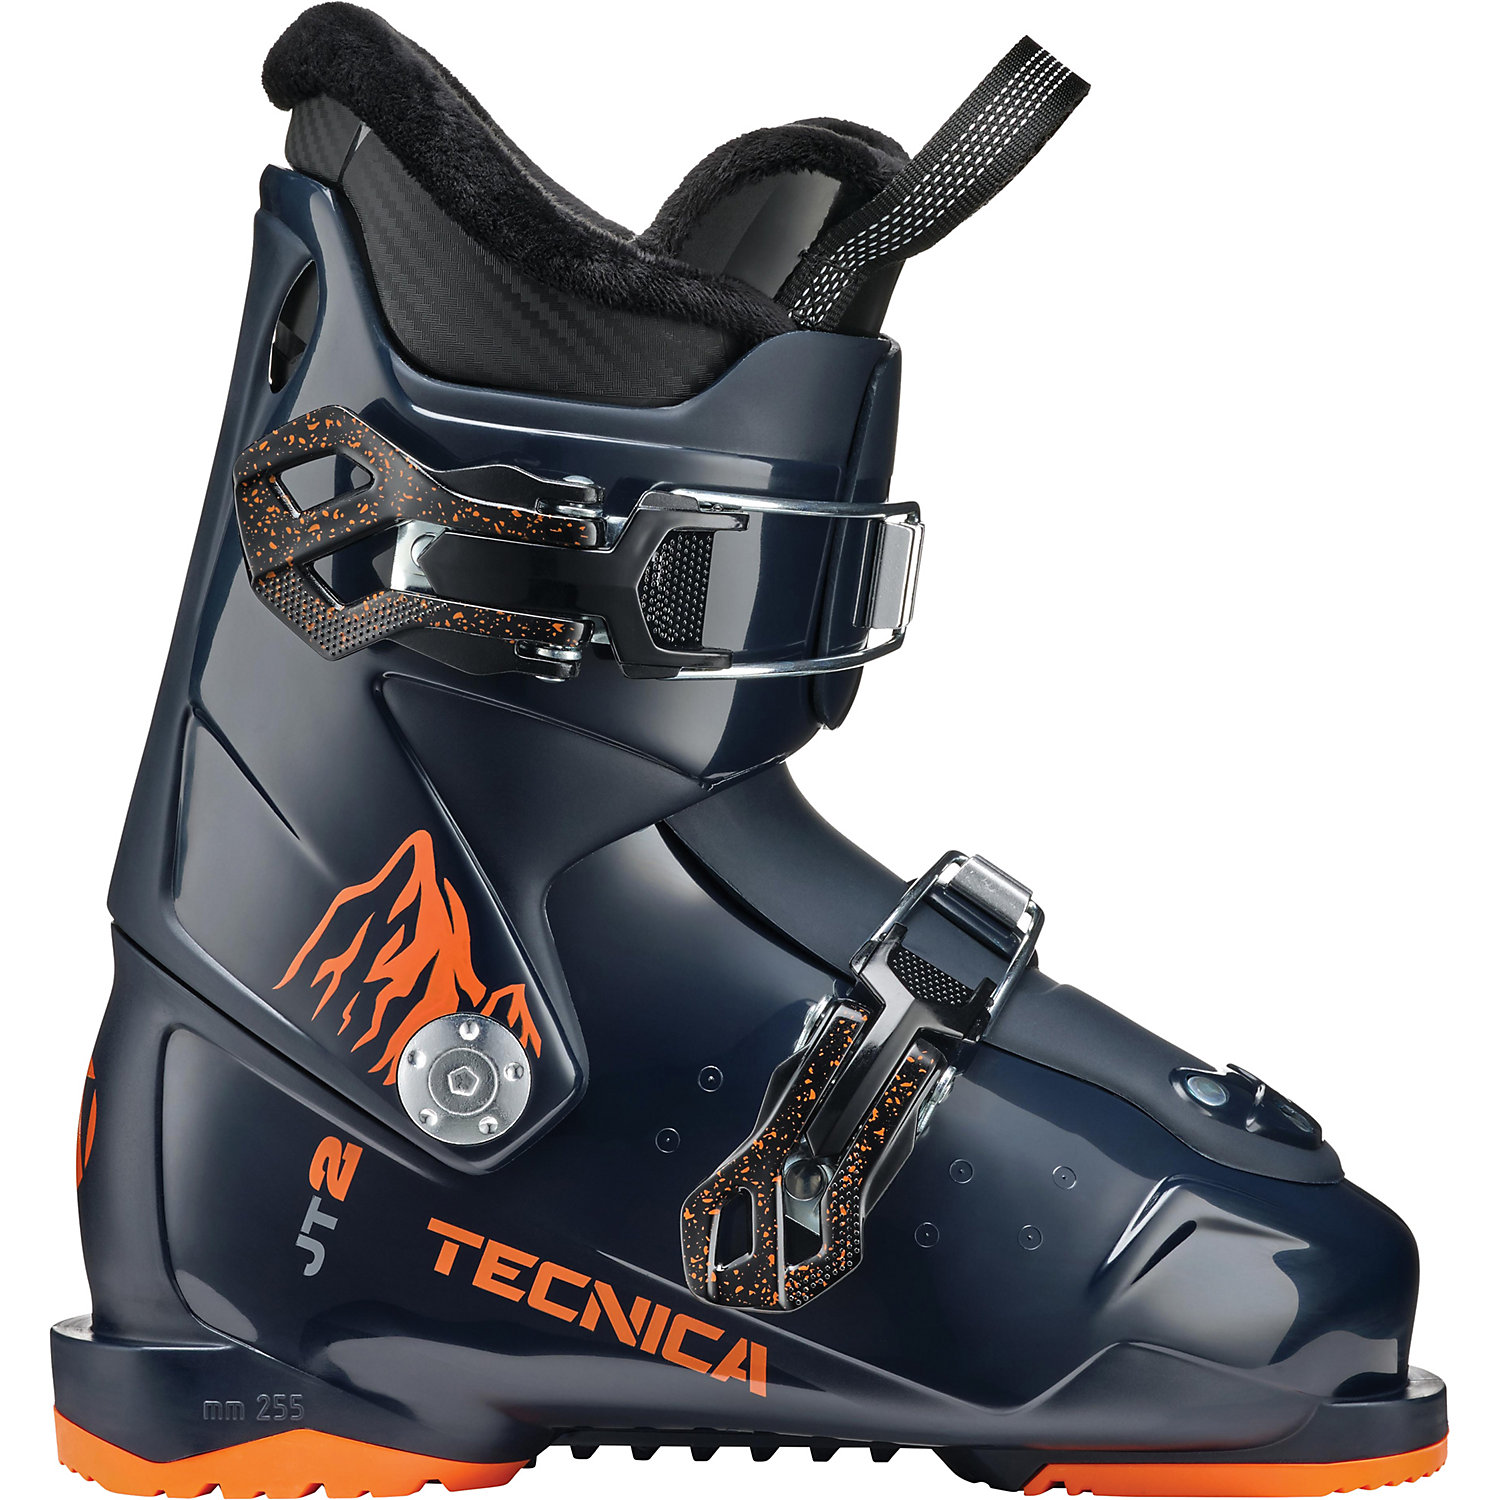 Tecnica Juniors JT 2 Ski Boot